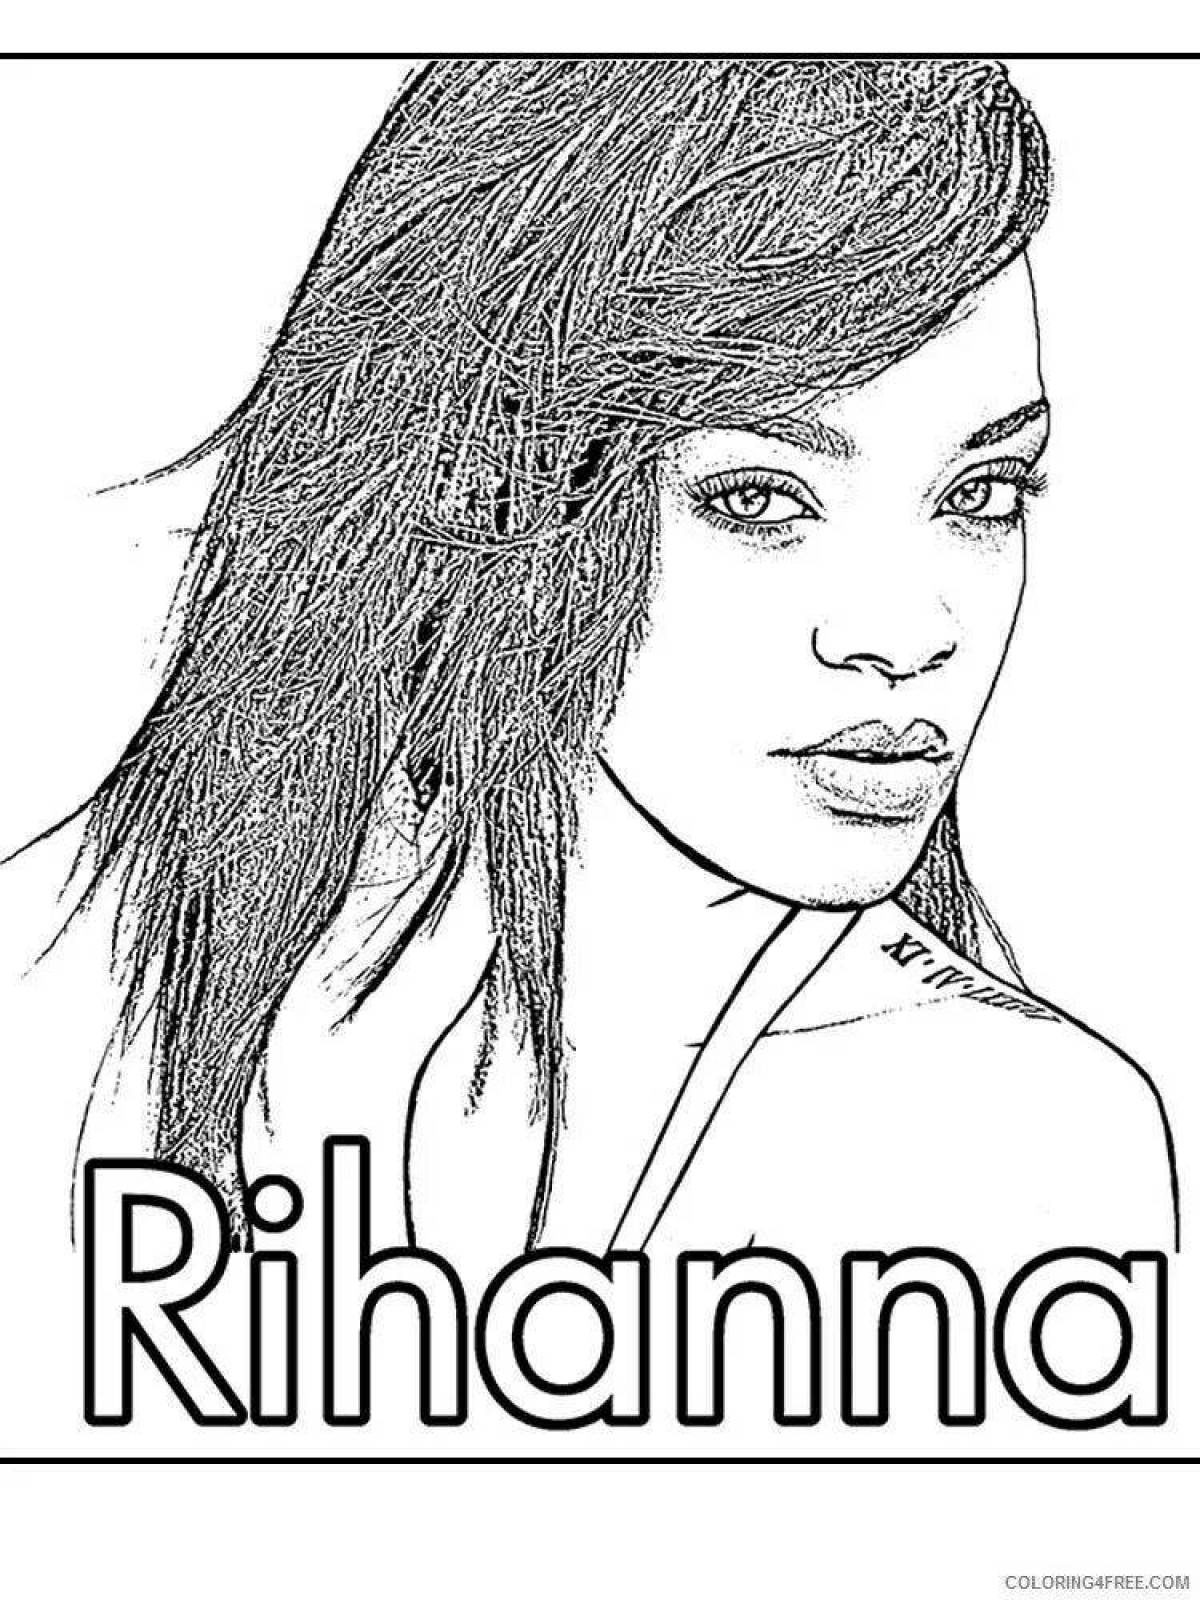 Rihanna's attractive coloring page